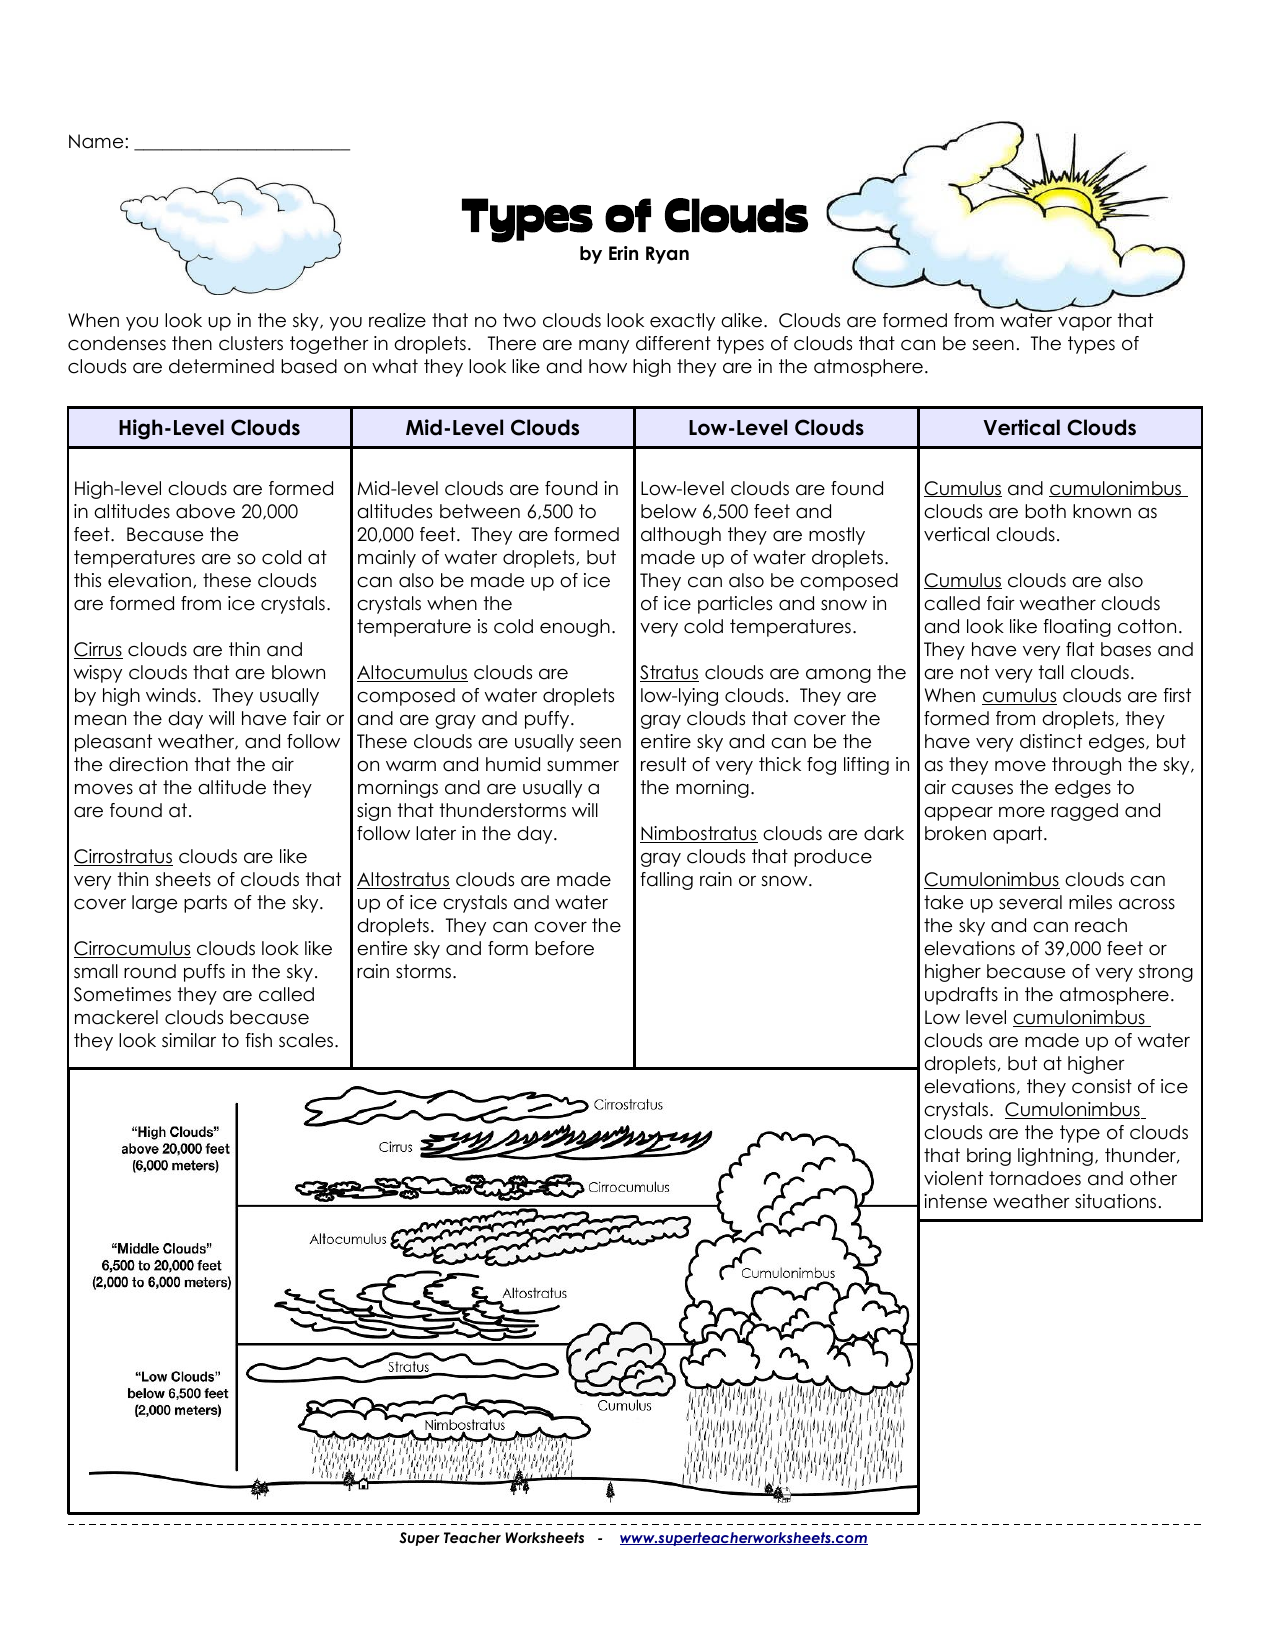 Types of Clouds - Super Teacher Worksheets Throughout Types Of Clouds Worksheet